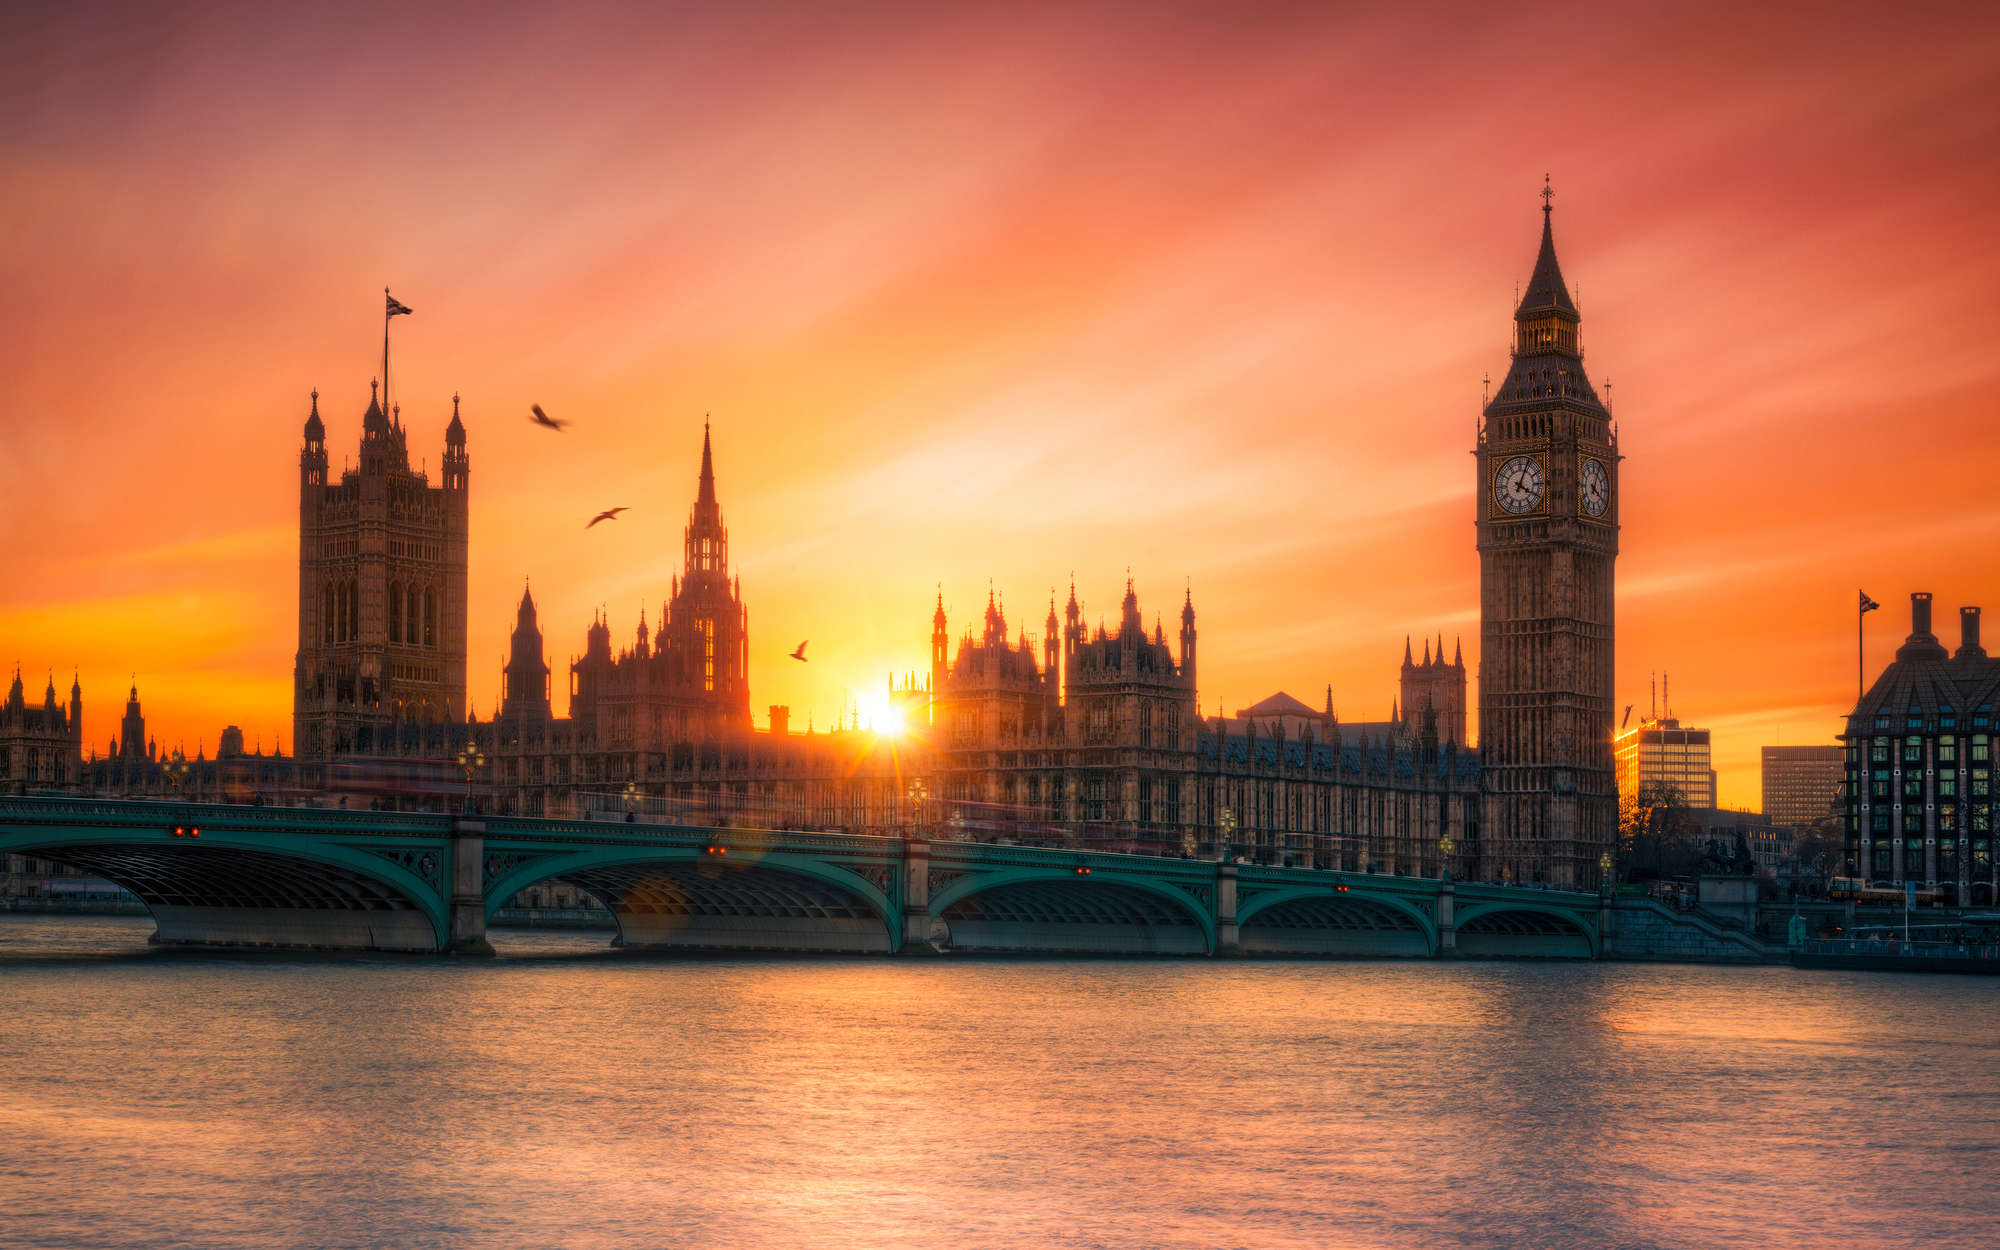             Photo wallpaper London skyline at sunset - matt smooth fleece
        